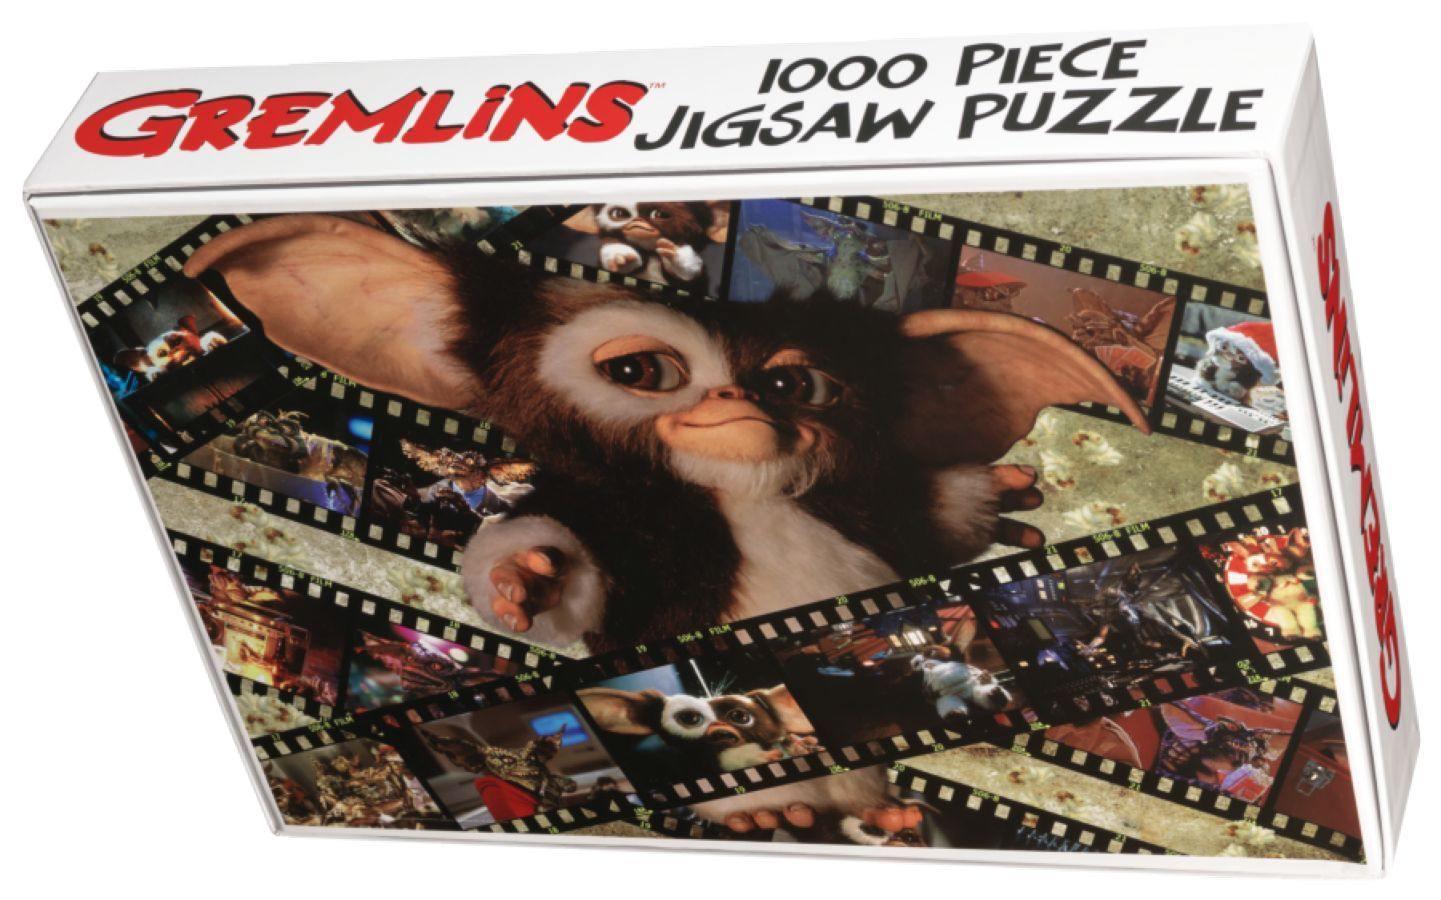 IKO1770 Gremlins - 1000 Piece Jigsaw Puzzle - Ikon Collectables - Titan Pop Culture